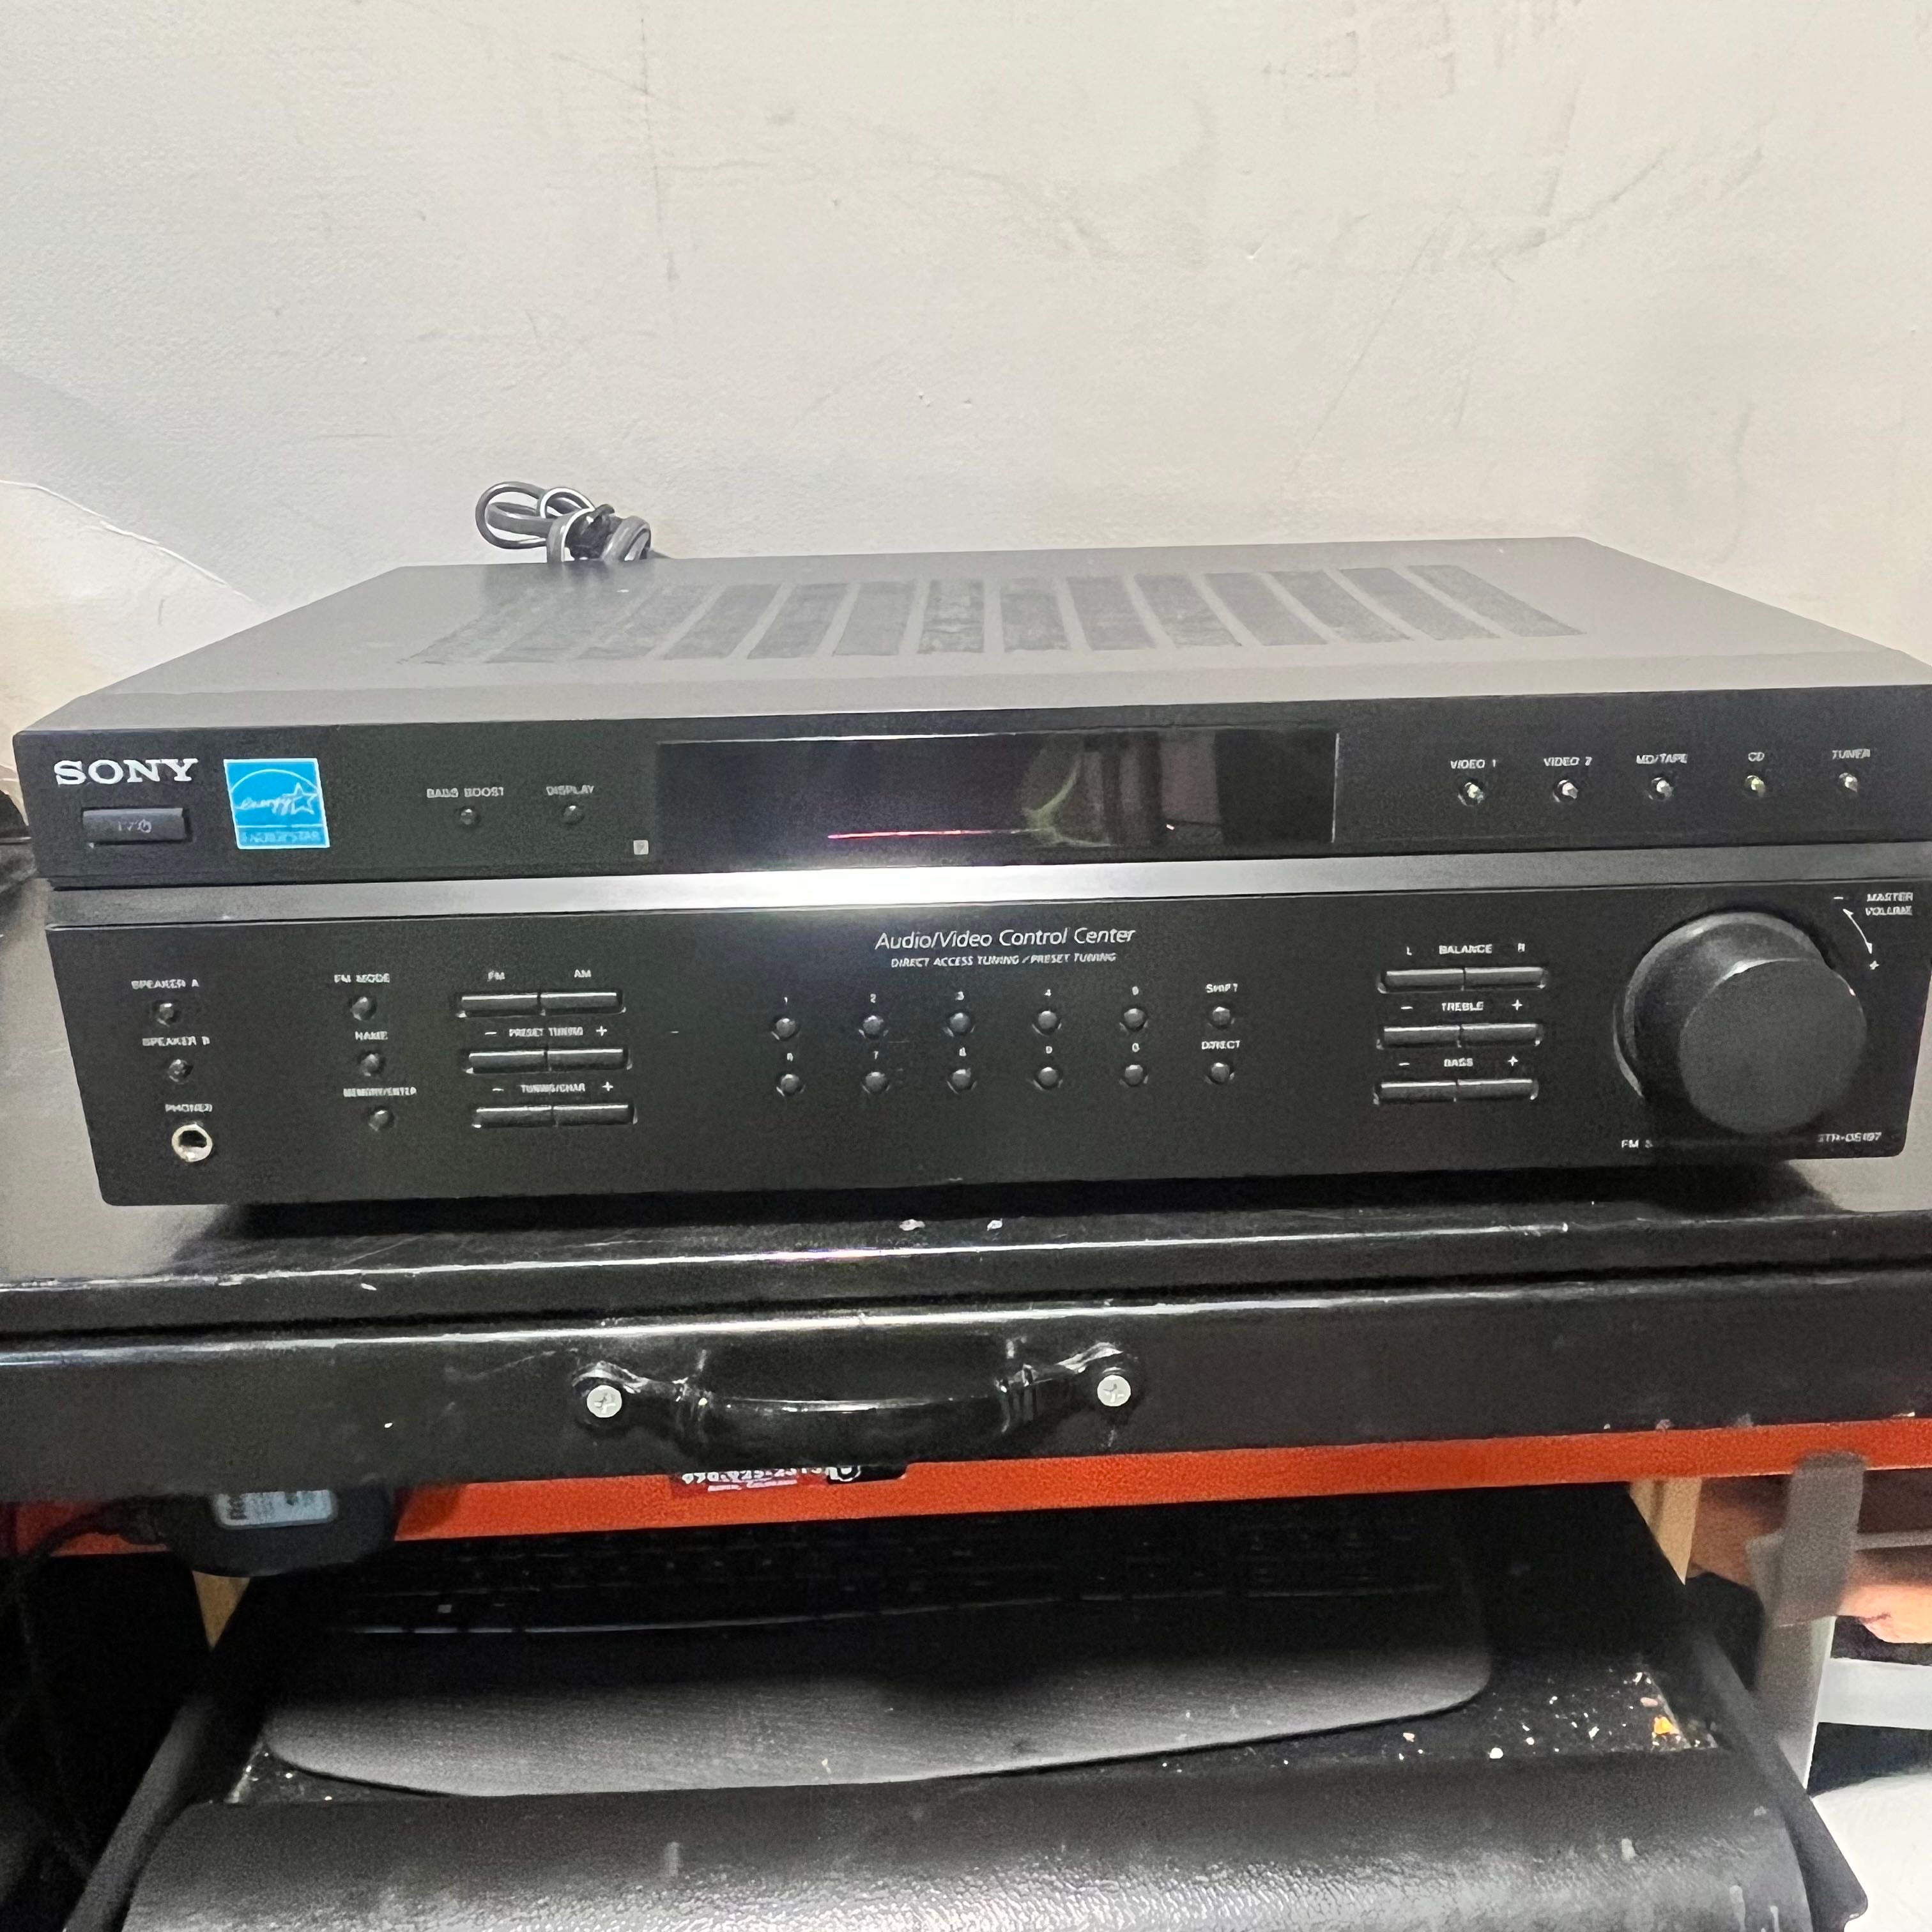 Sony STR-DE197 Audio/Video Control CenterAM/FM Reciever